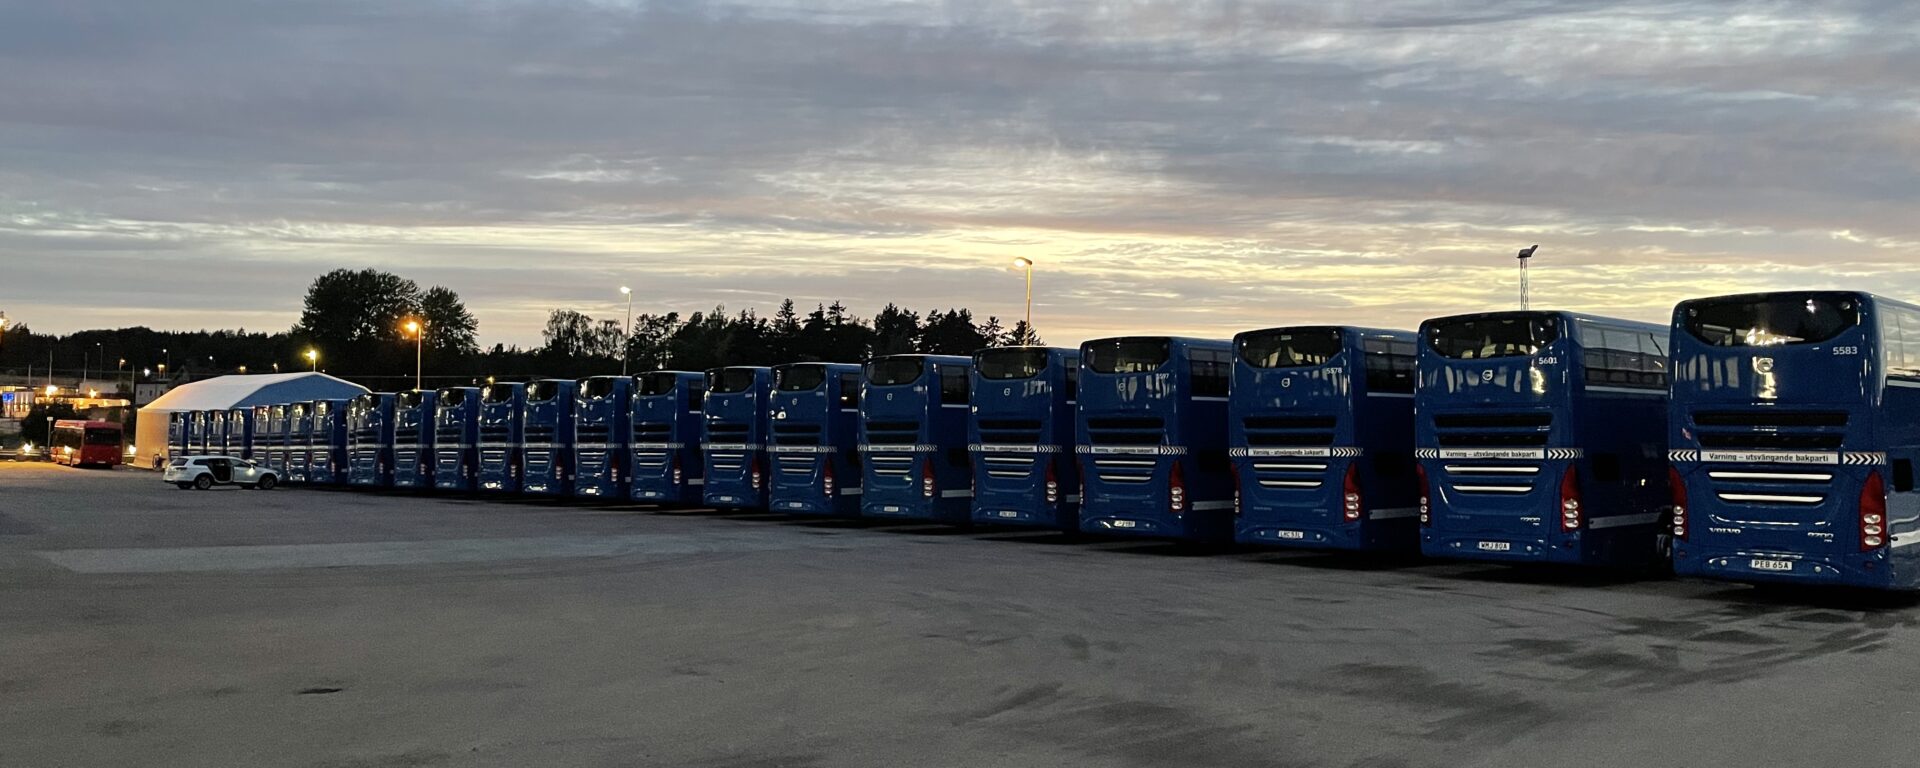 Transdev bus in Norrtälje Sweden